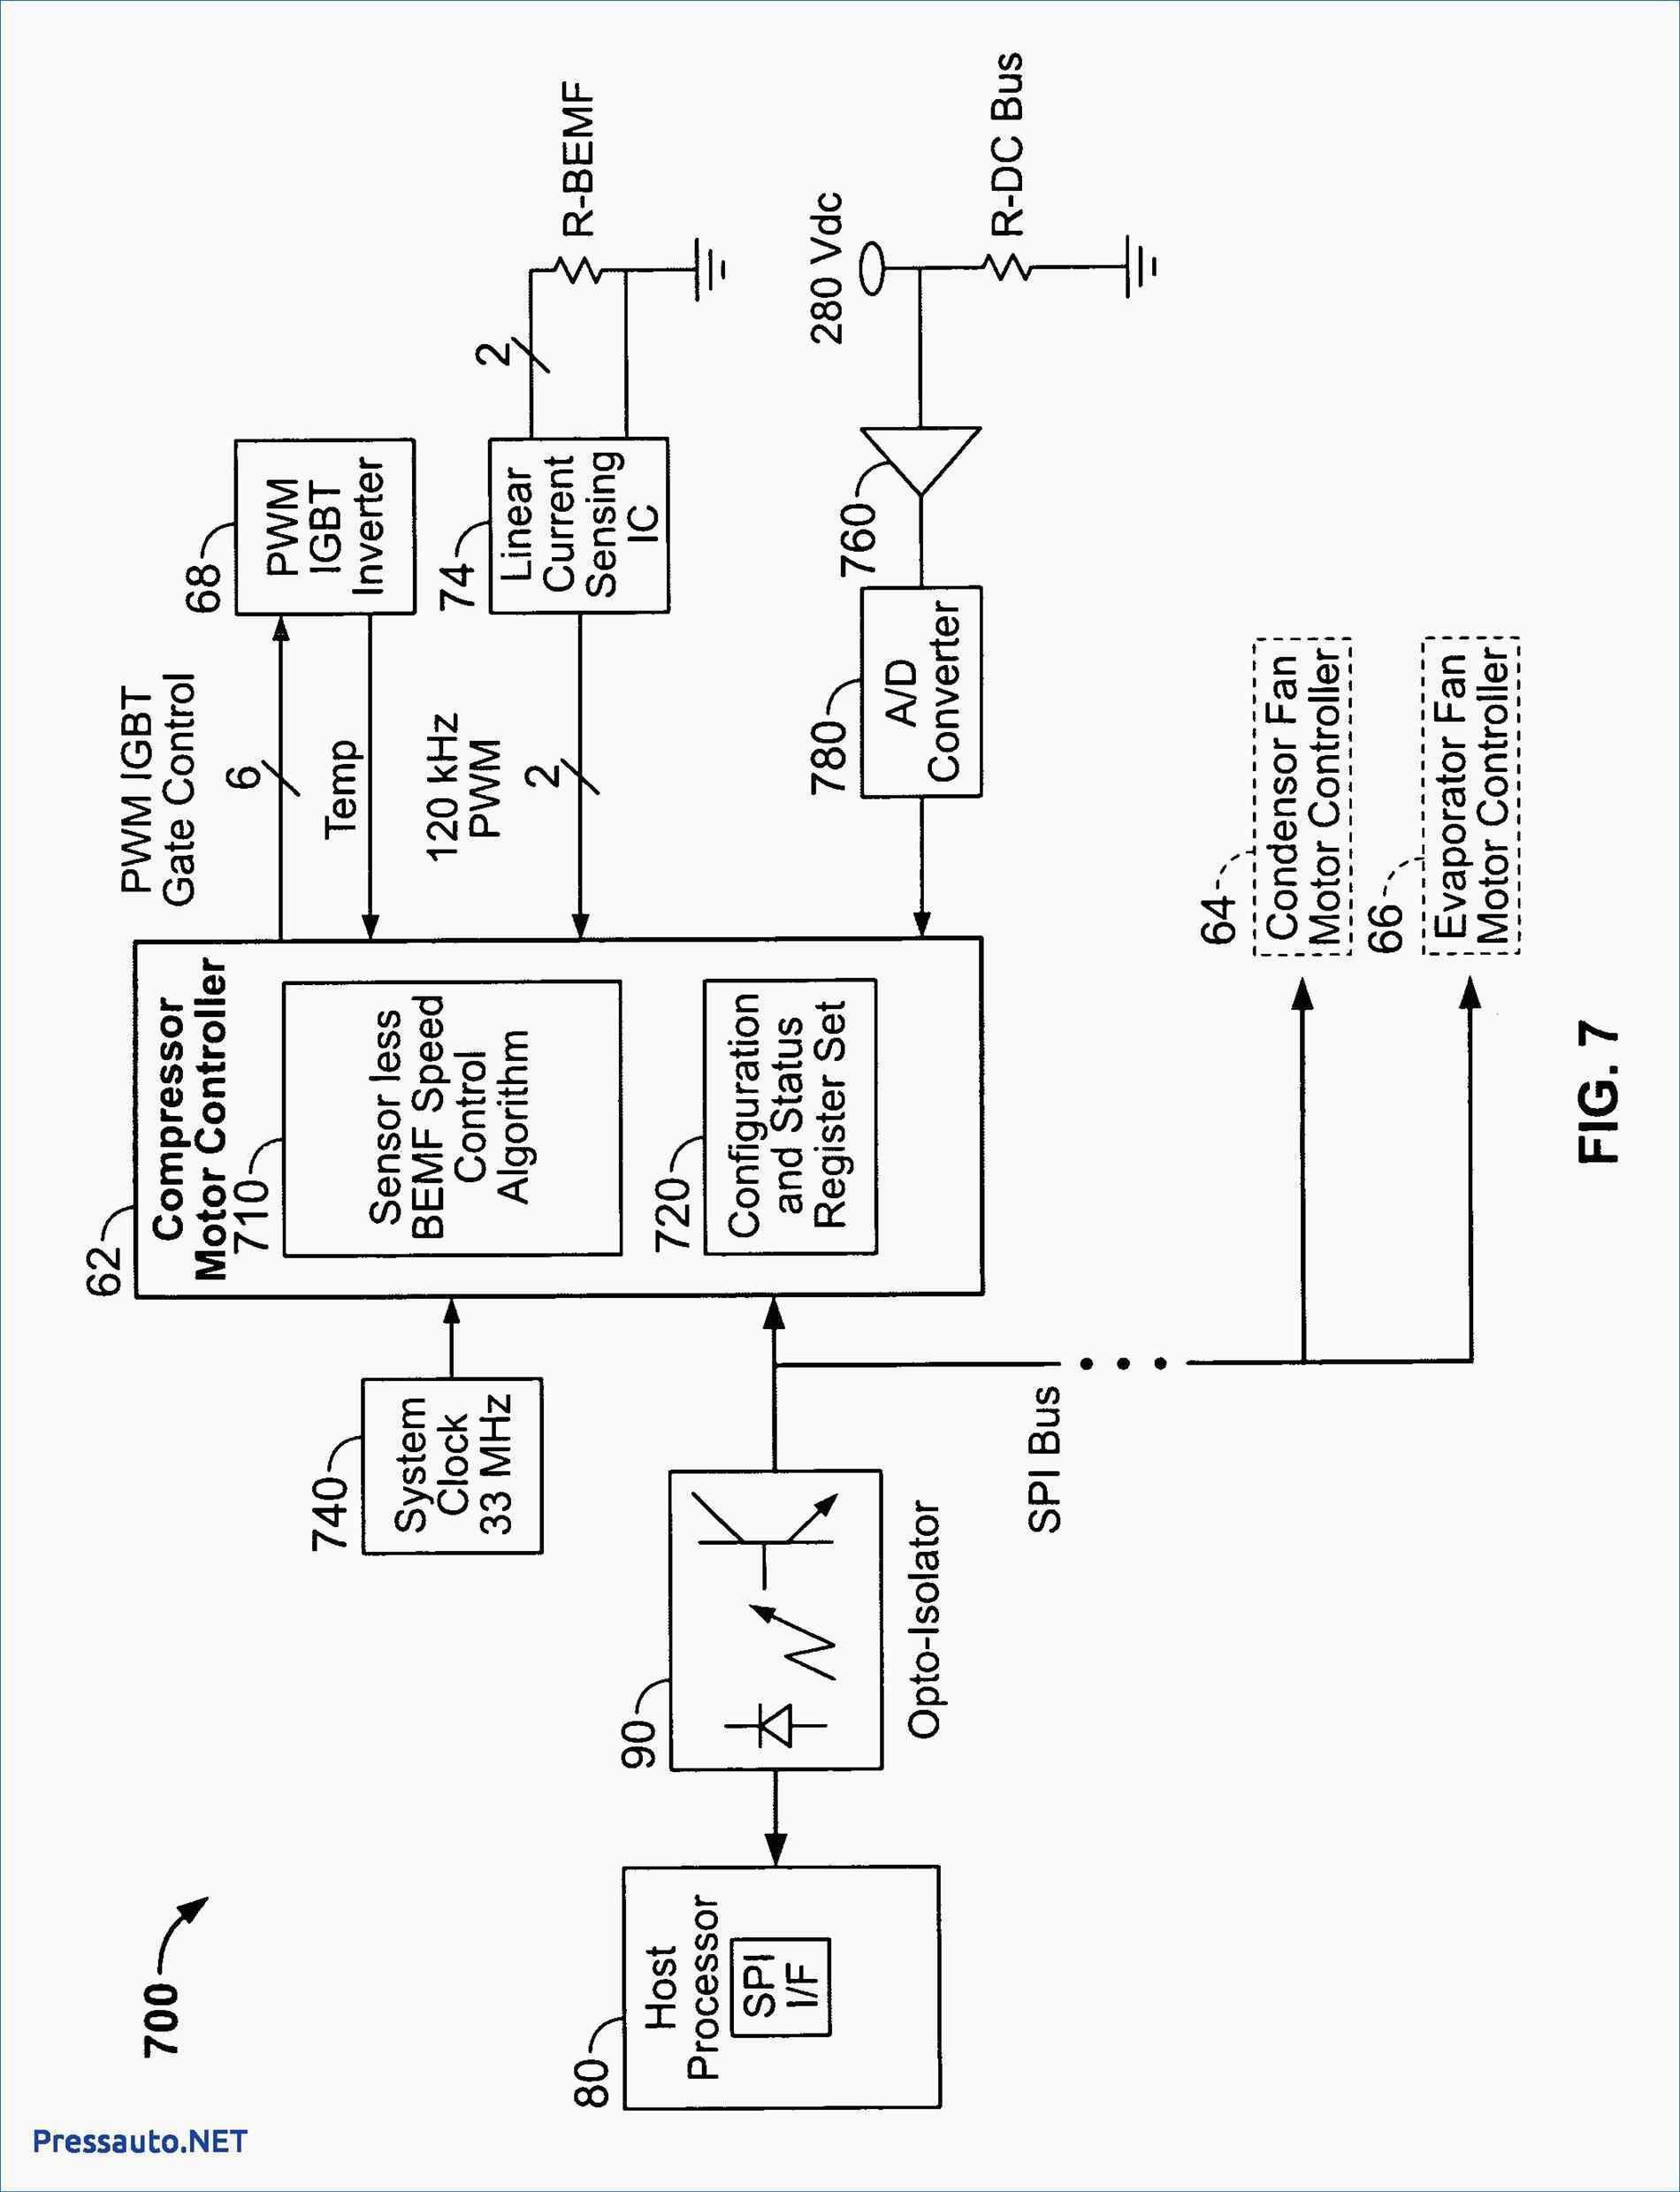 Wiring Diagram for Nippondenso Alternator New Alternator Wiring Diagram Tachometer Valid Vintage Tachometer Wiring